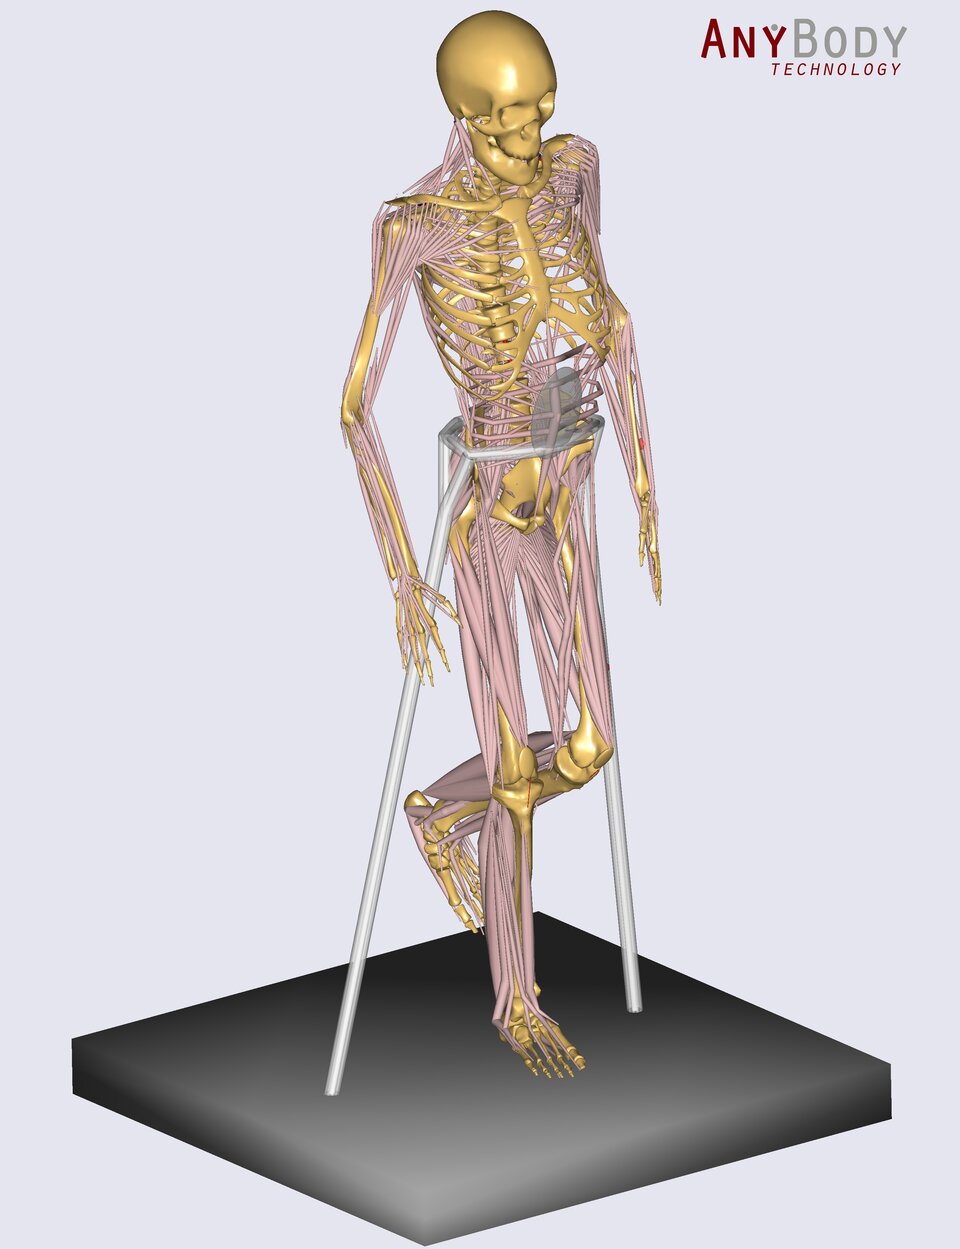 AnyBody musculo-skeletal model on microgravity treadmill